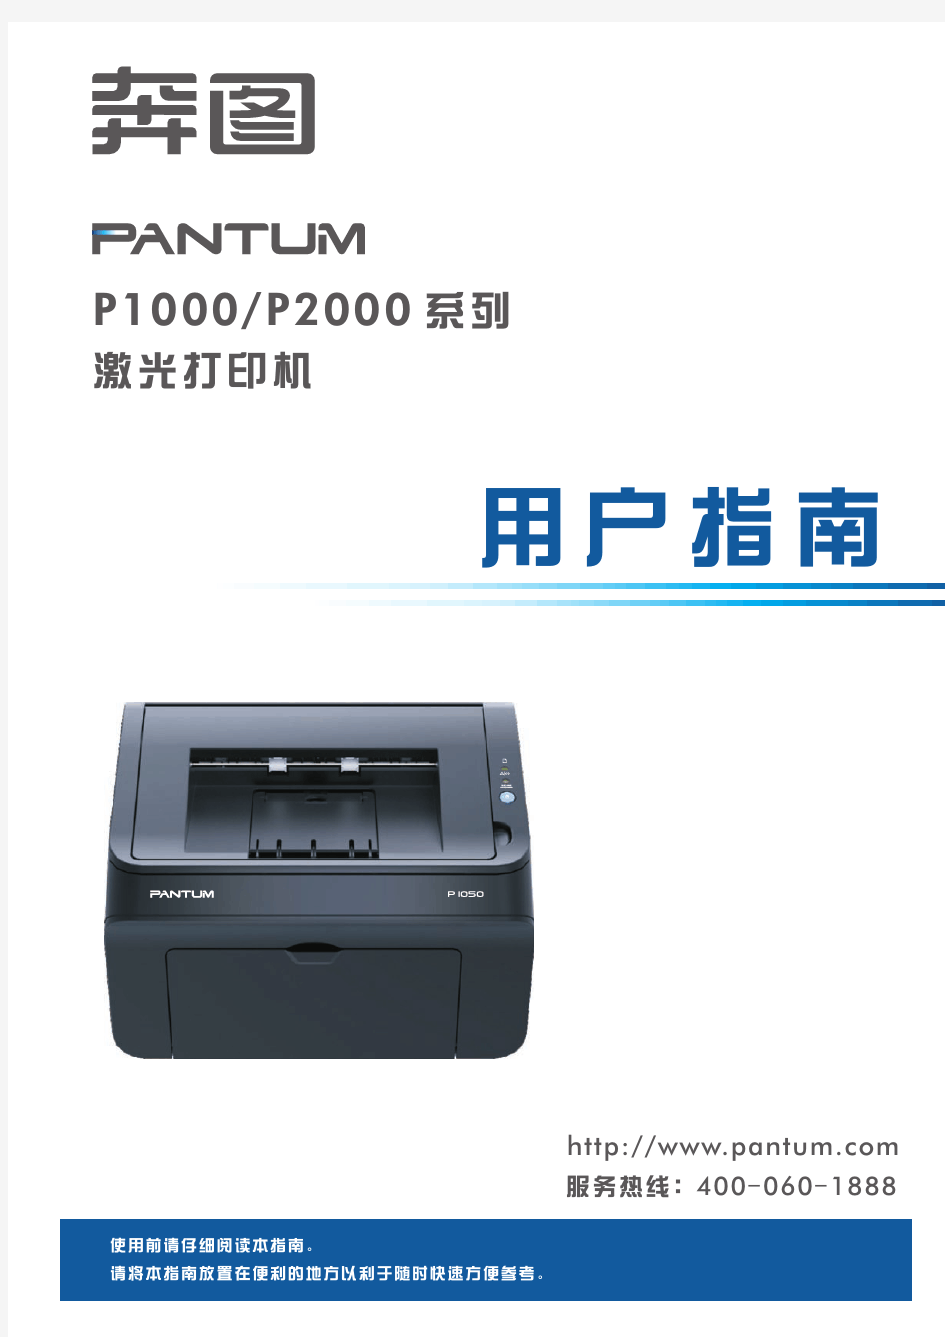 V 2.0 PANTUM打印机用户指南中文